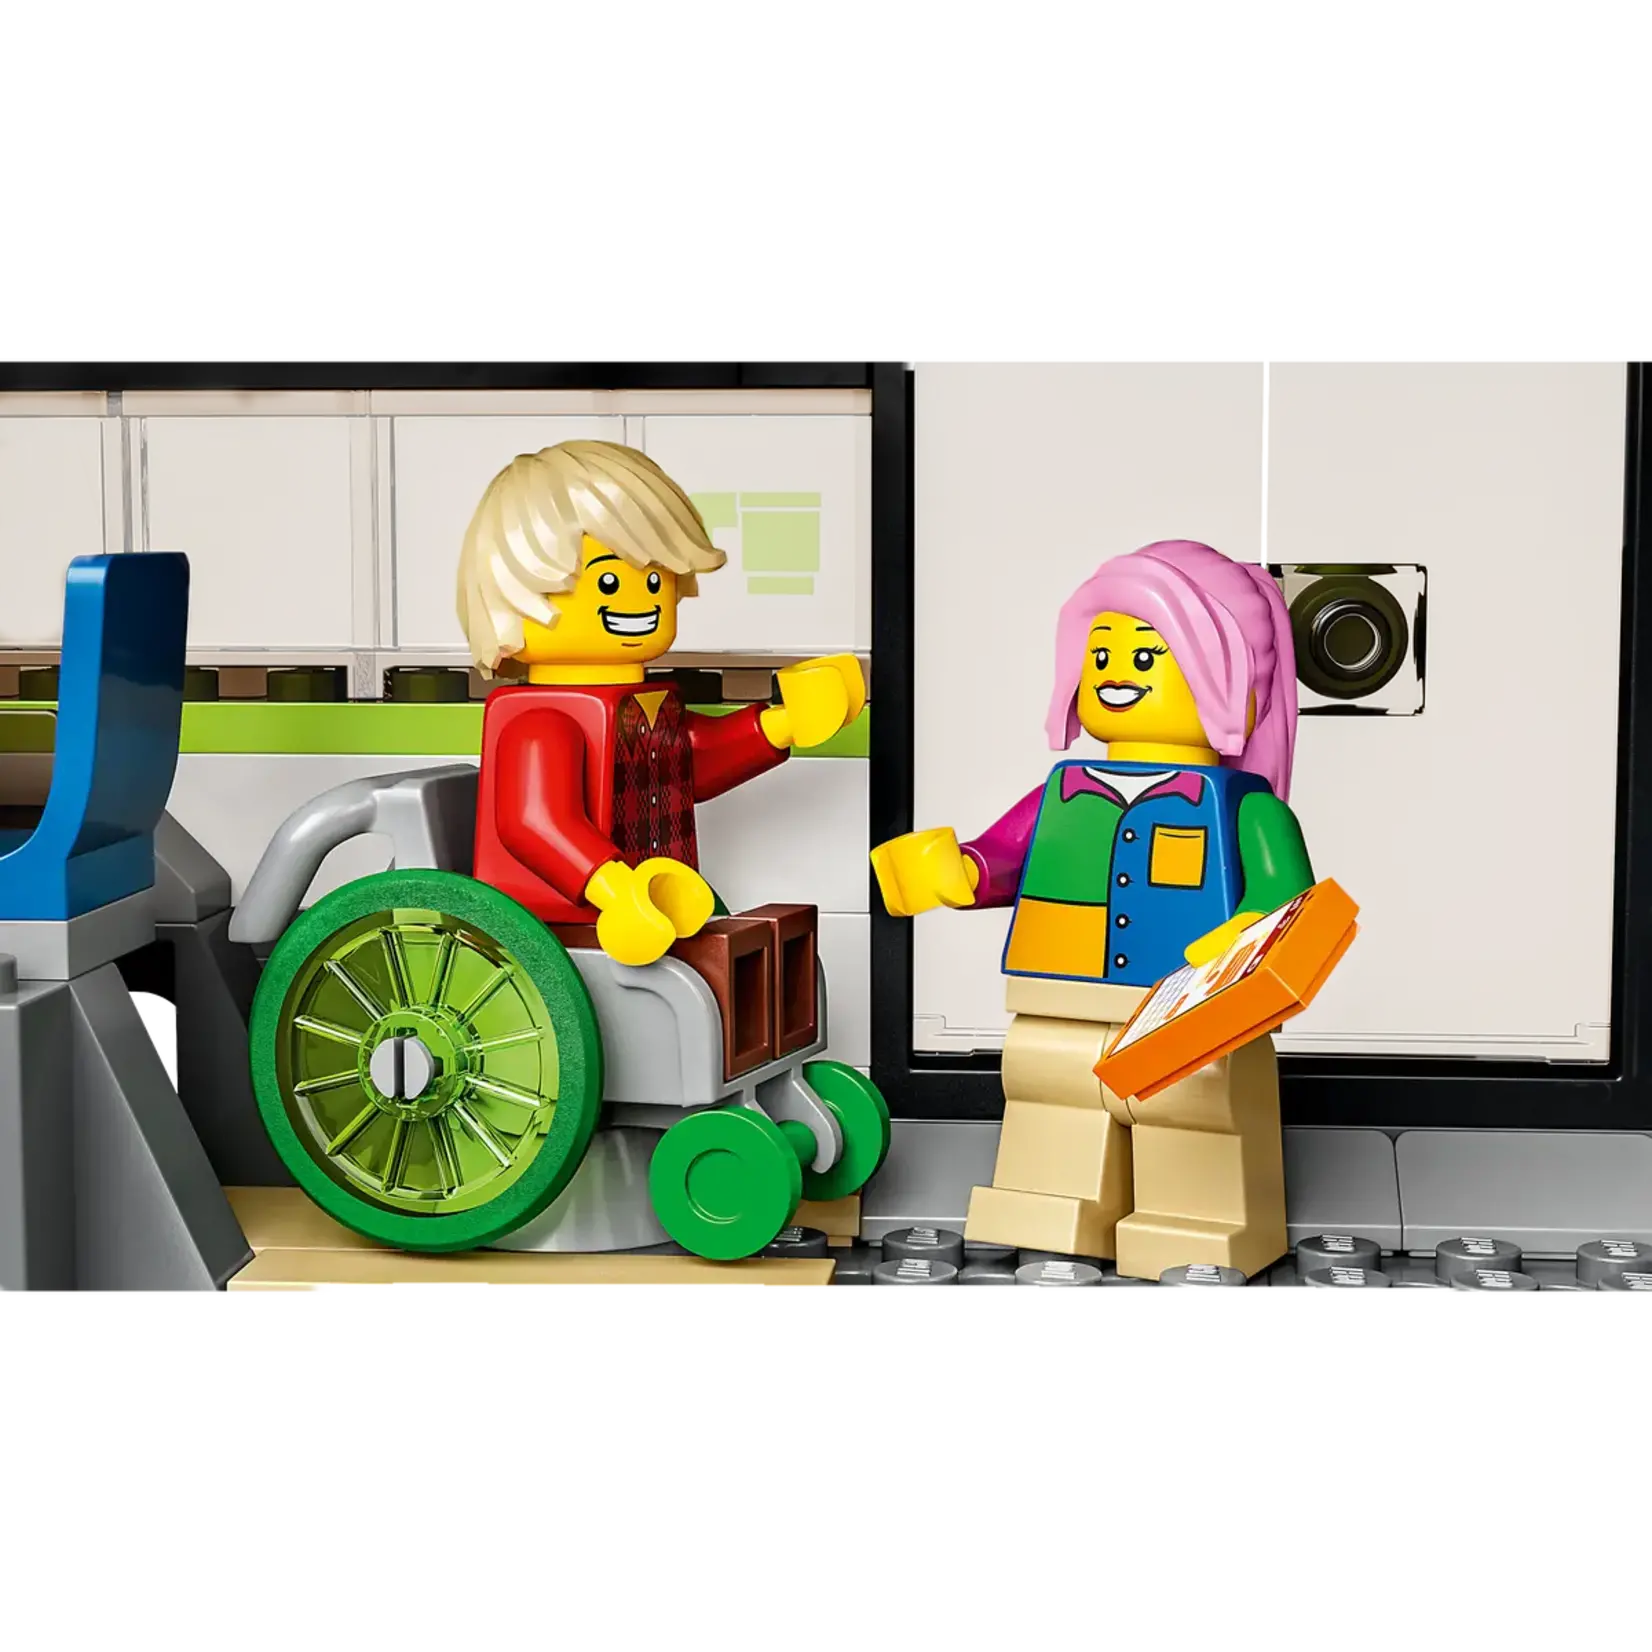 LEGO LEGO - City - Trains - Passenger express train